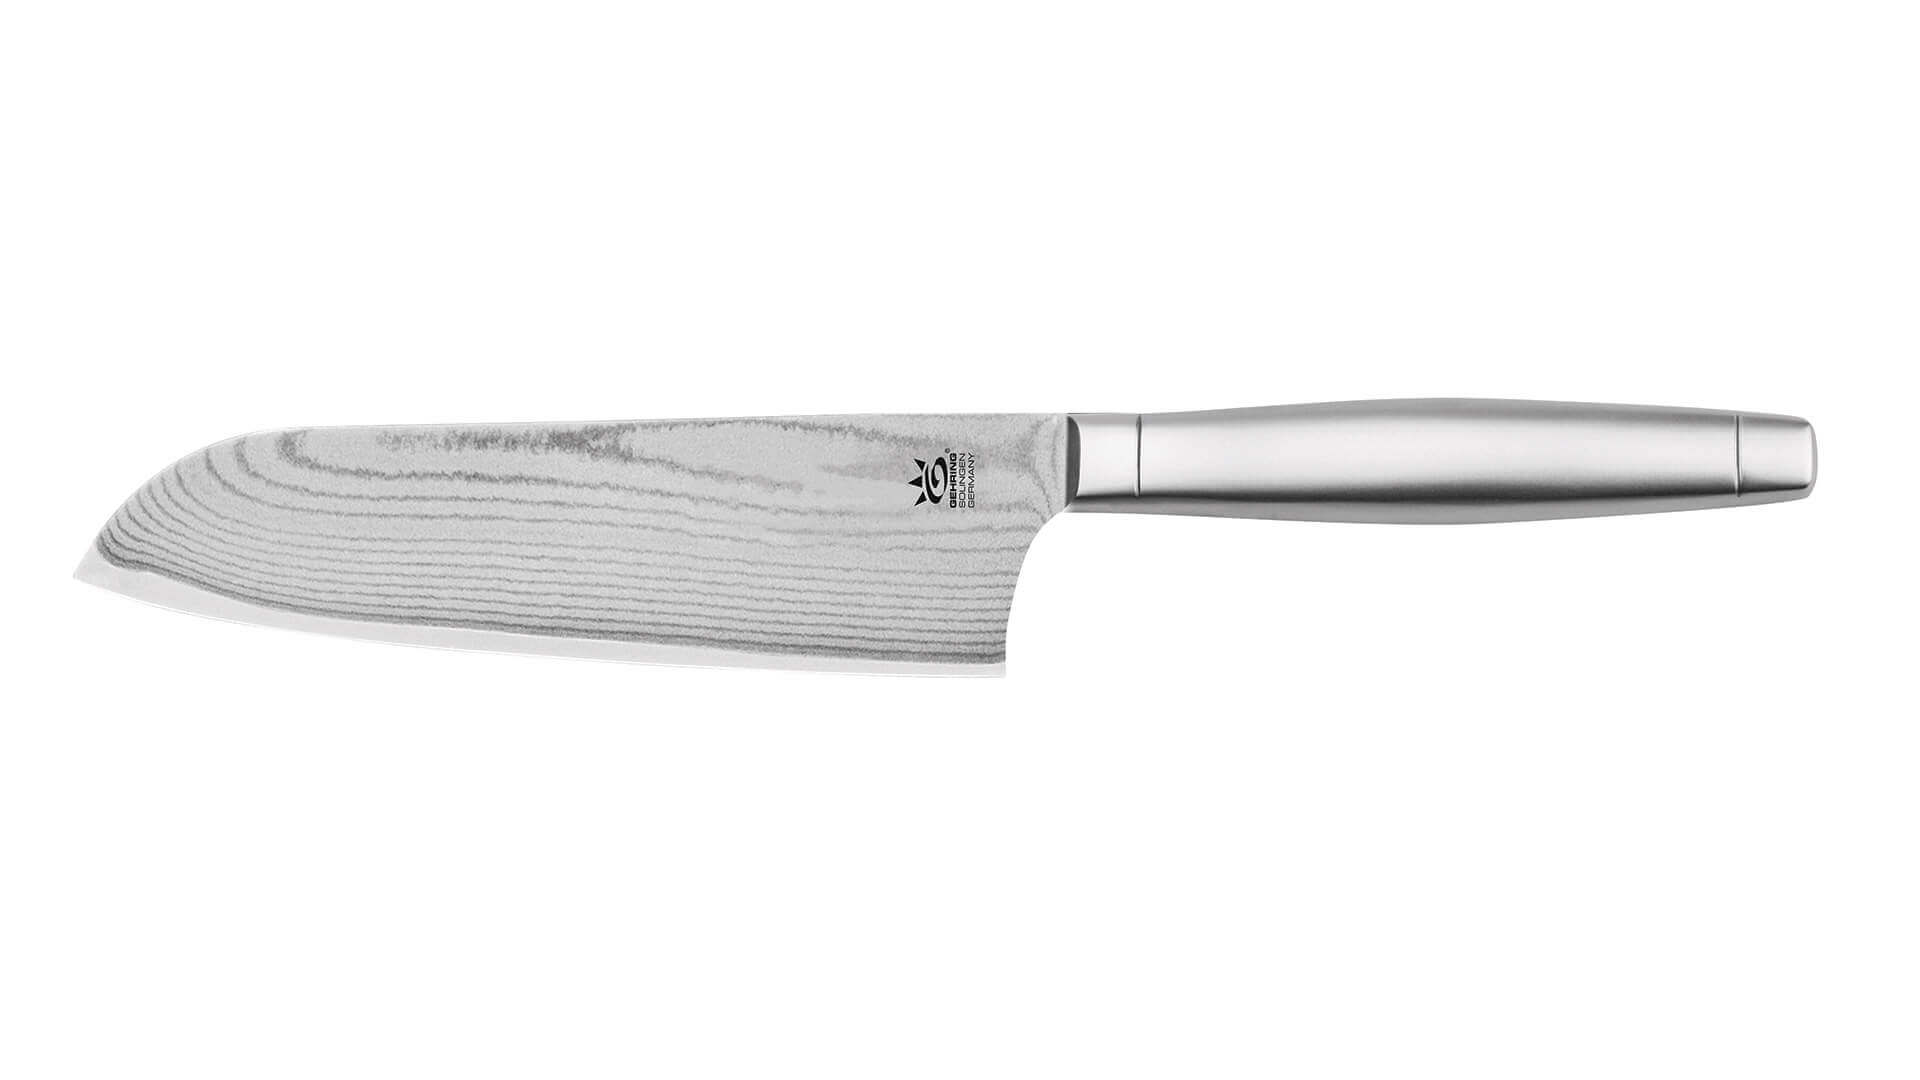 gehring-hgs-my-santoku-knife-18-cm-solingen-buy